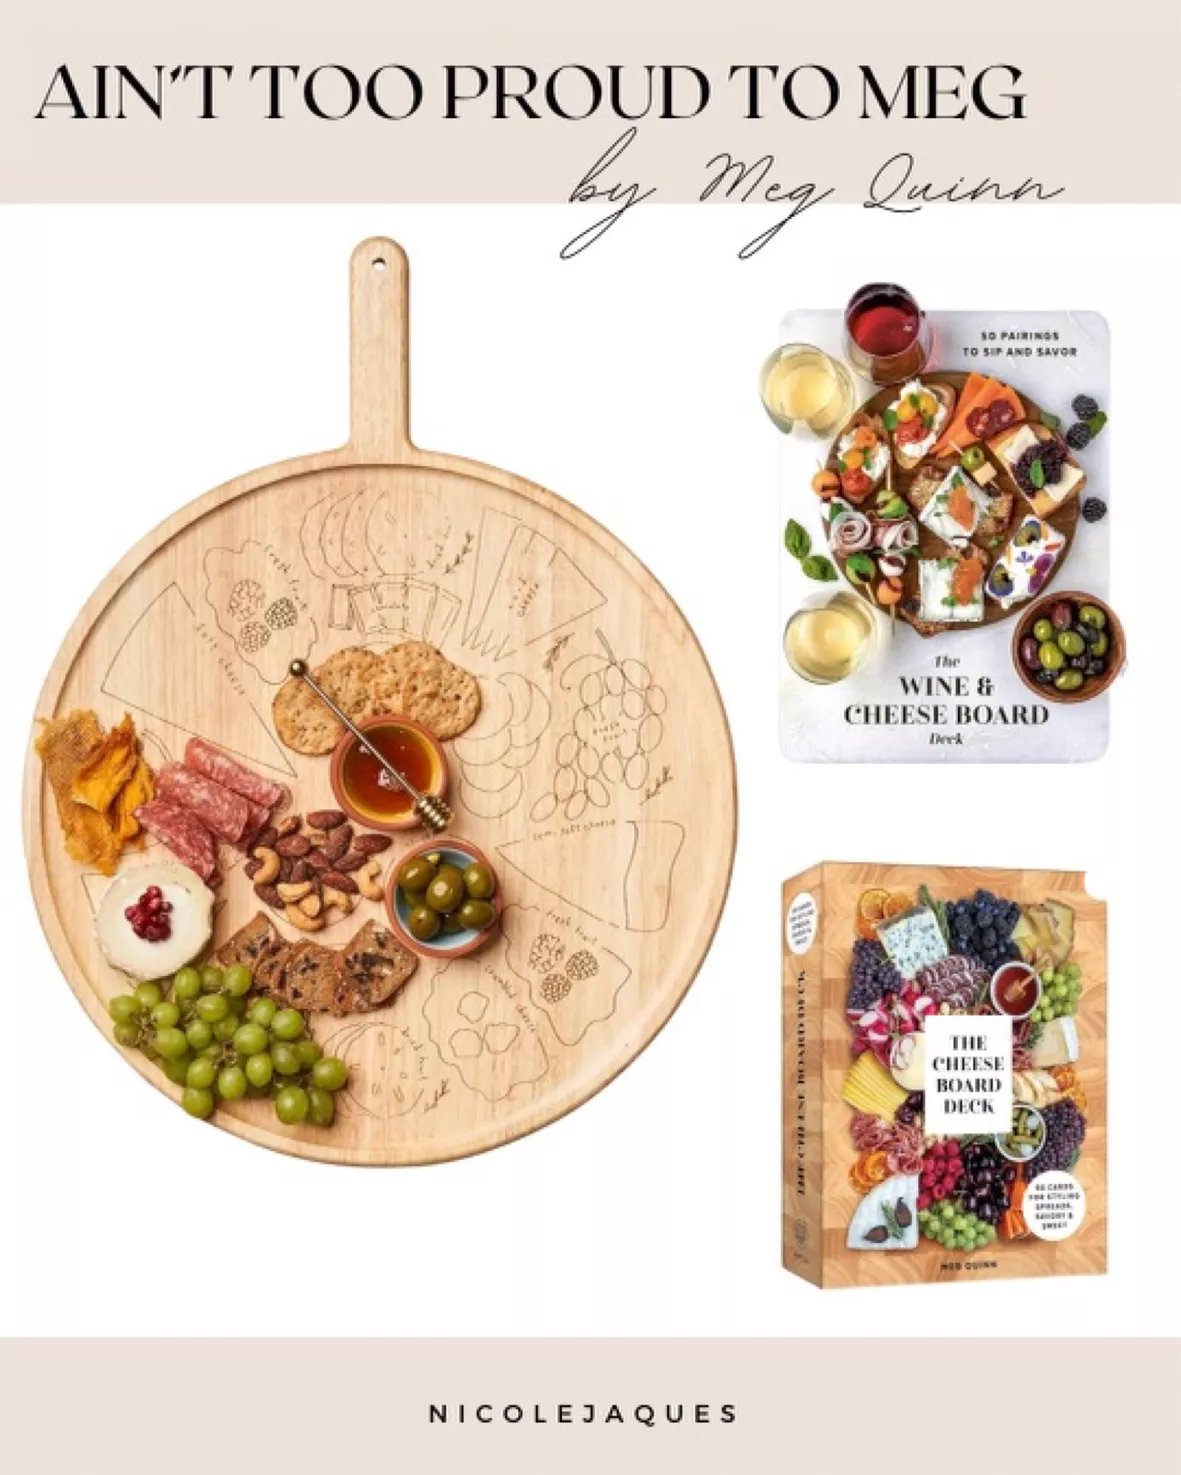 The Wine & Cheese Board Deck by Meg Quinn